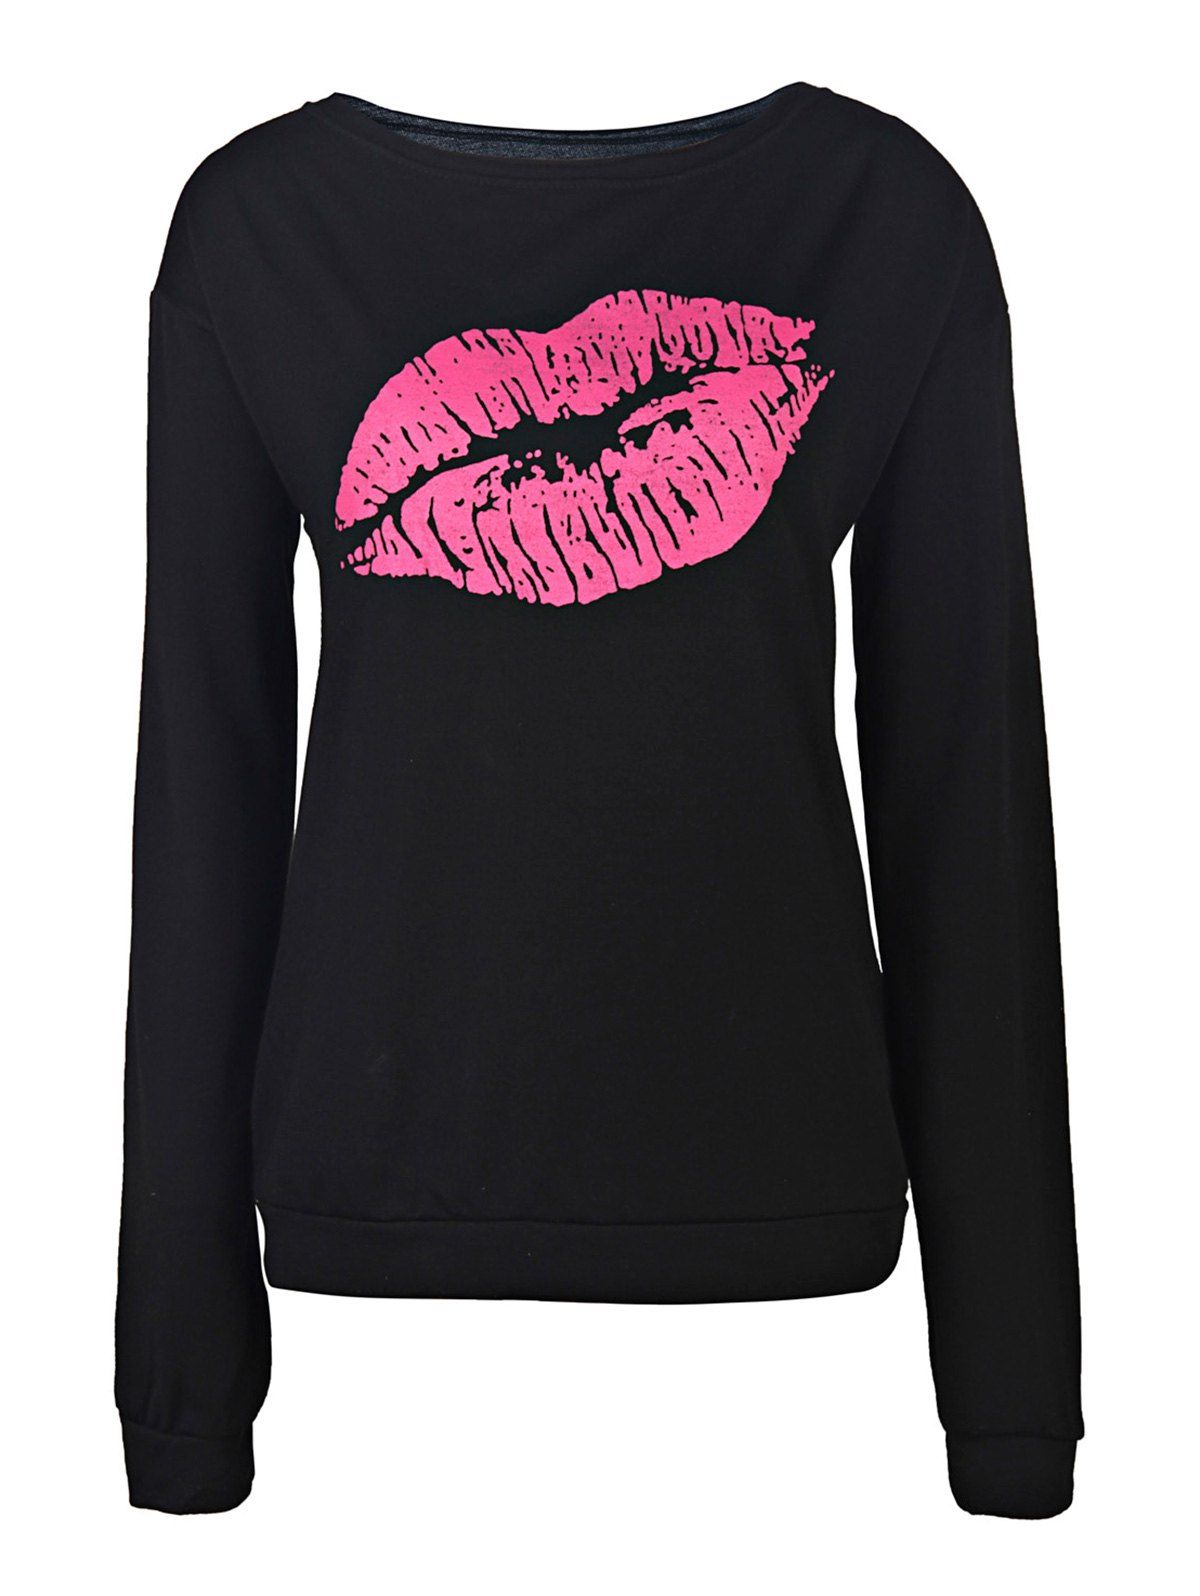 Attractive Lip Printed Color Block Pullover Sweatshirt For Women - BLACK S